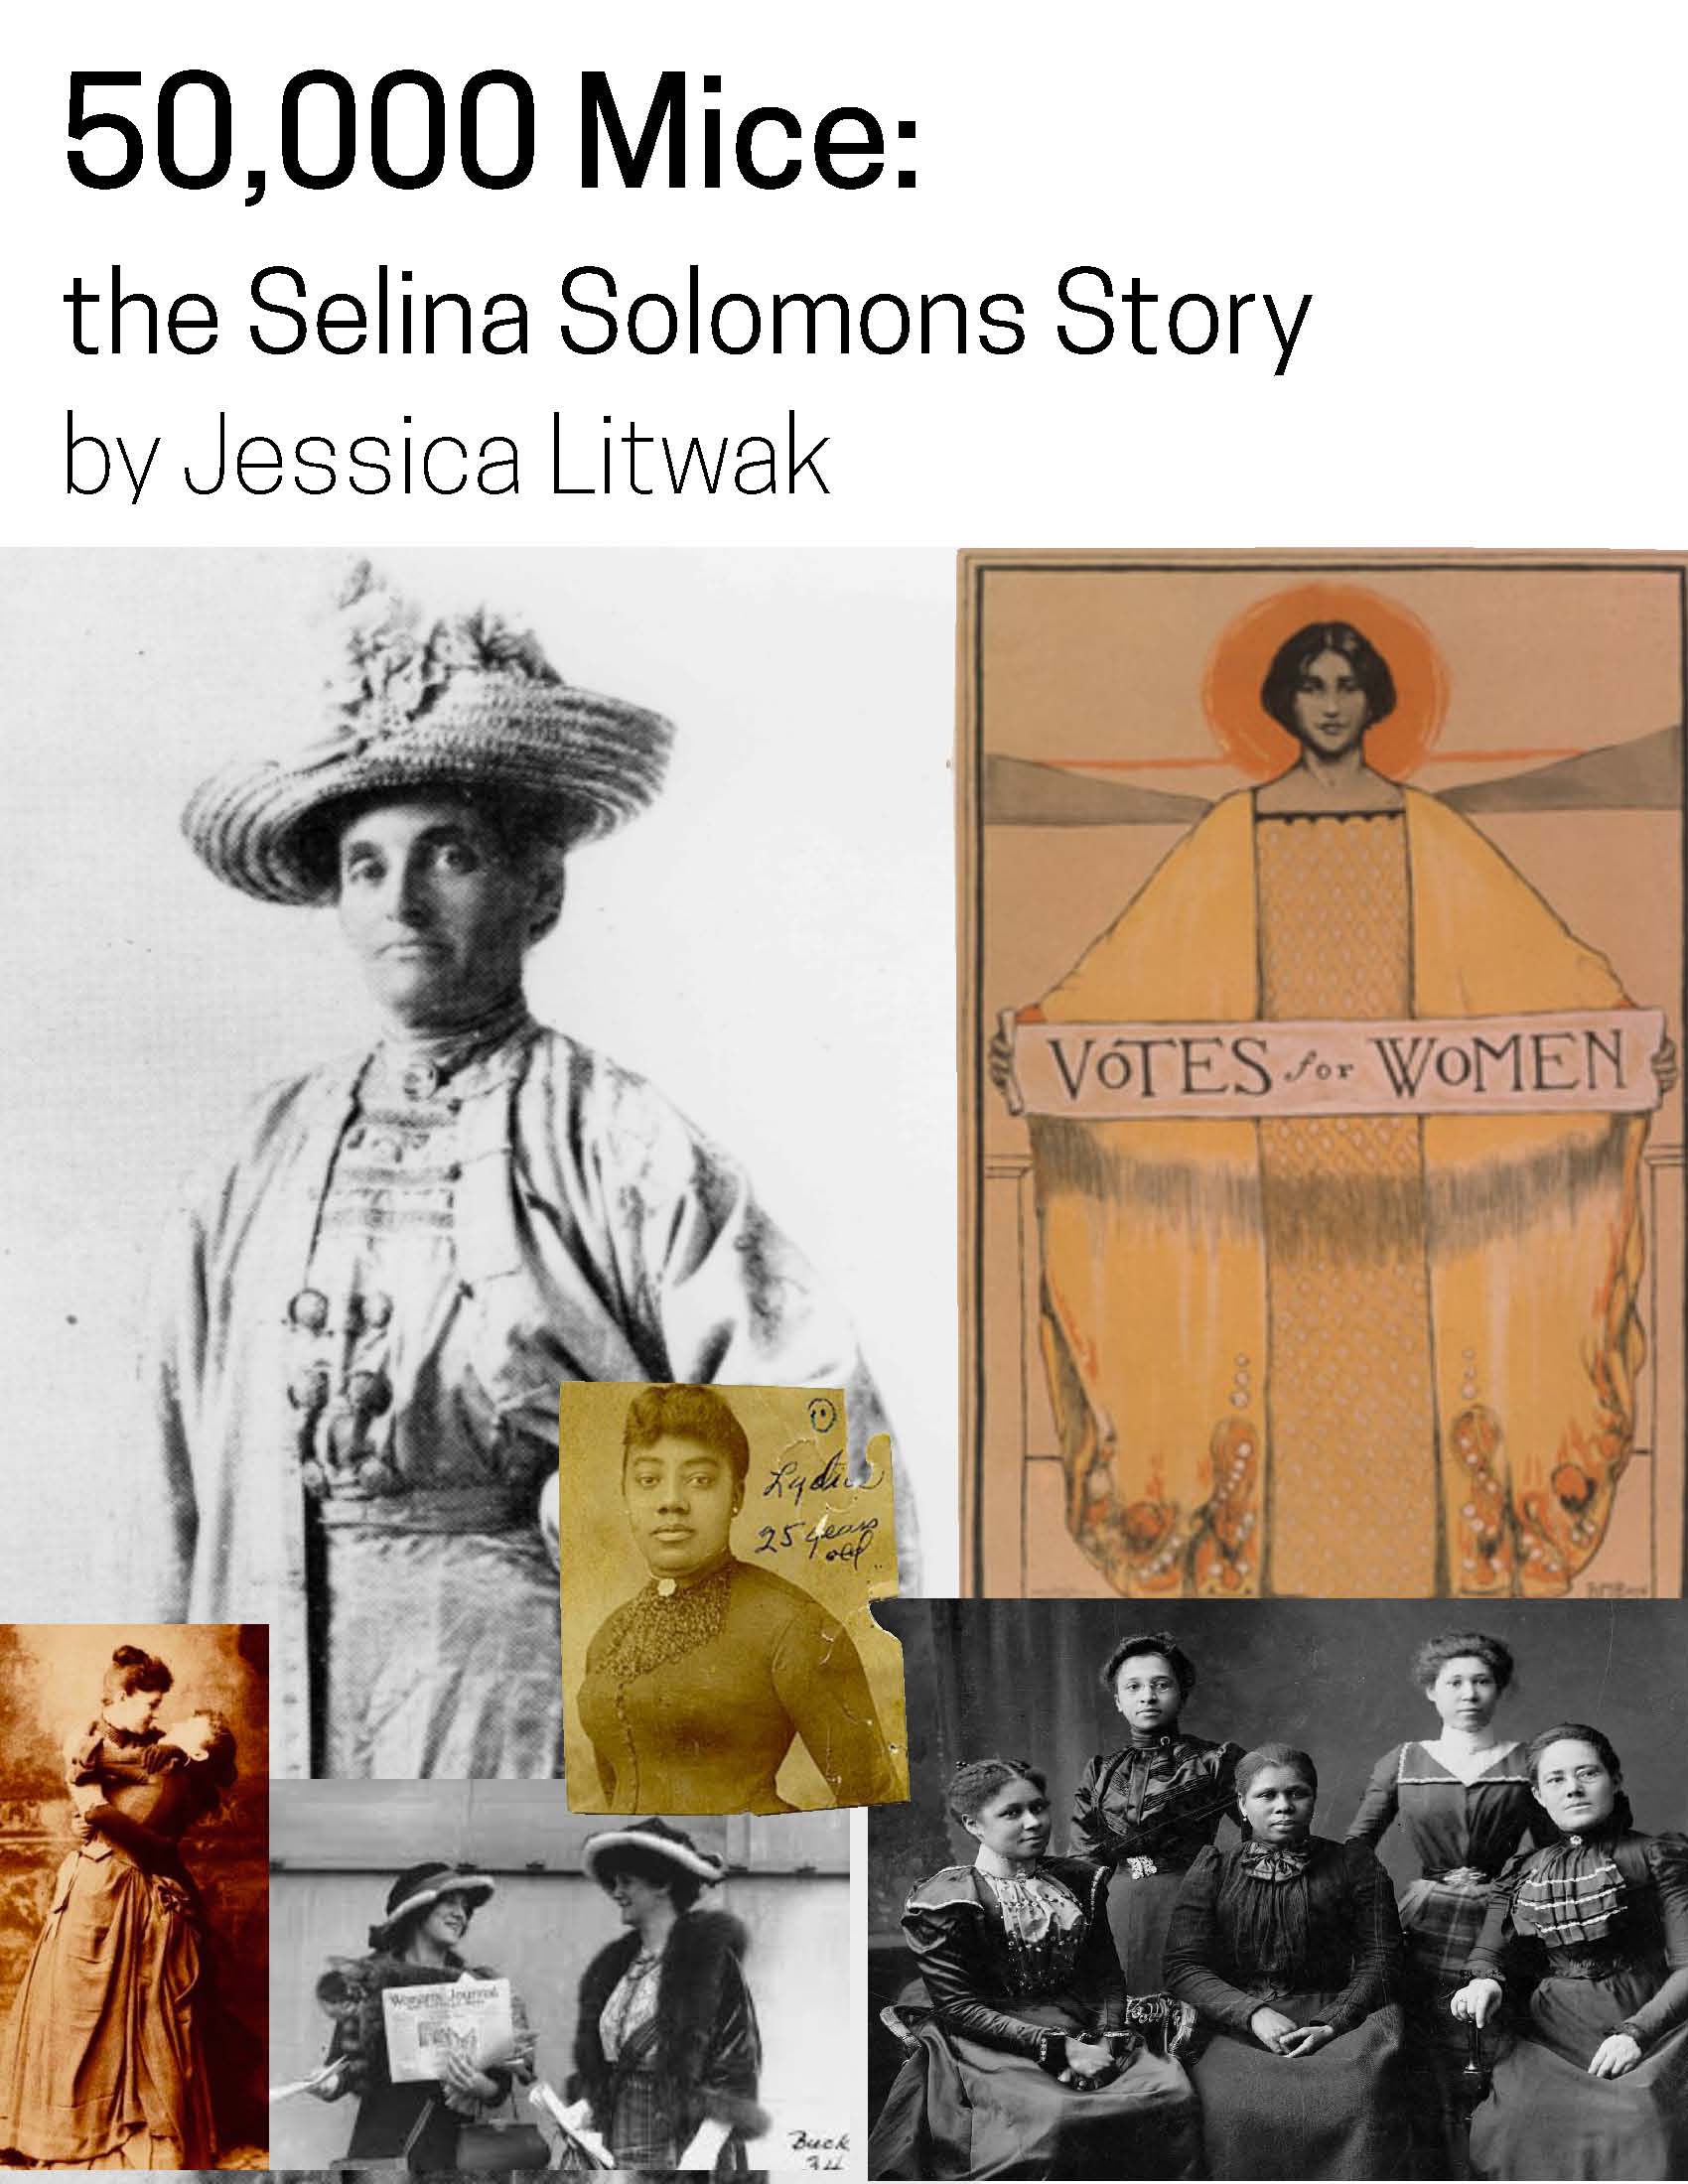 50,000 Mice, the Selena Solomons Story